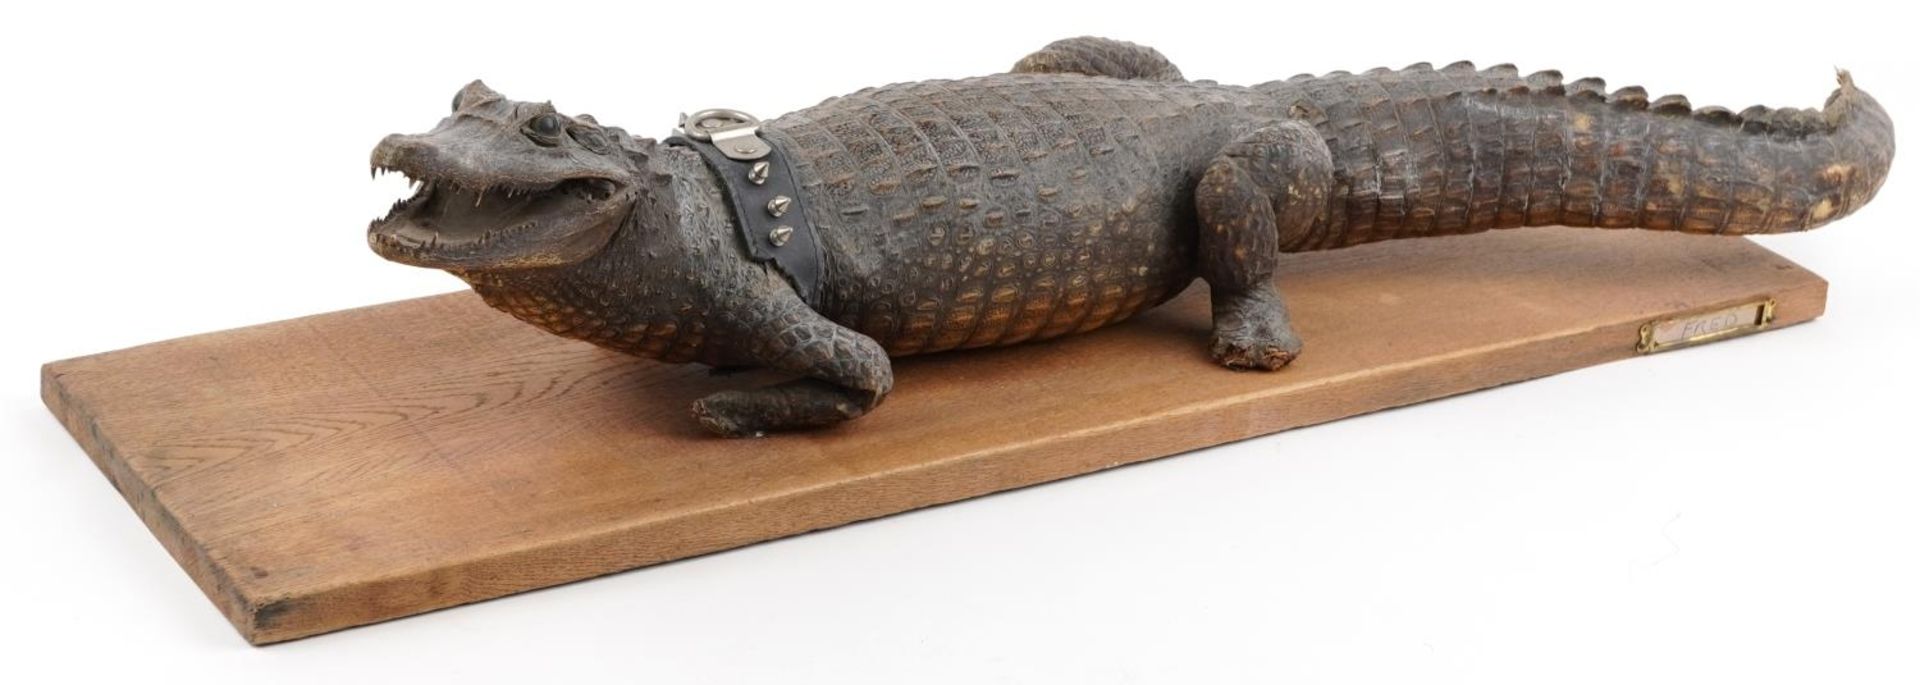 Taxidermy interest crocodile on hardwood base, 94.5cm in length